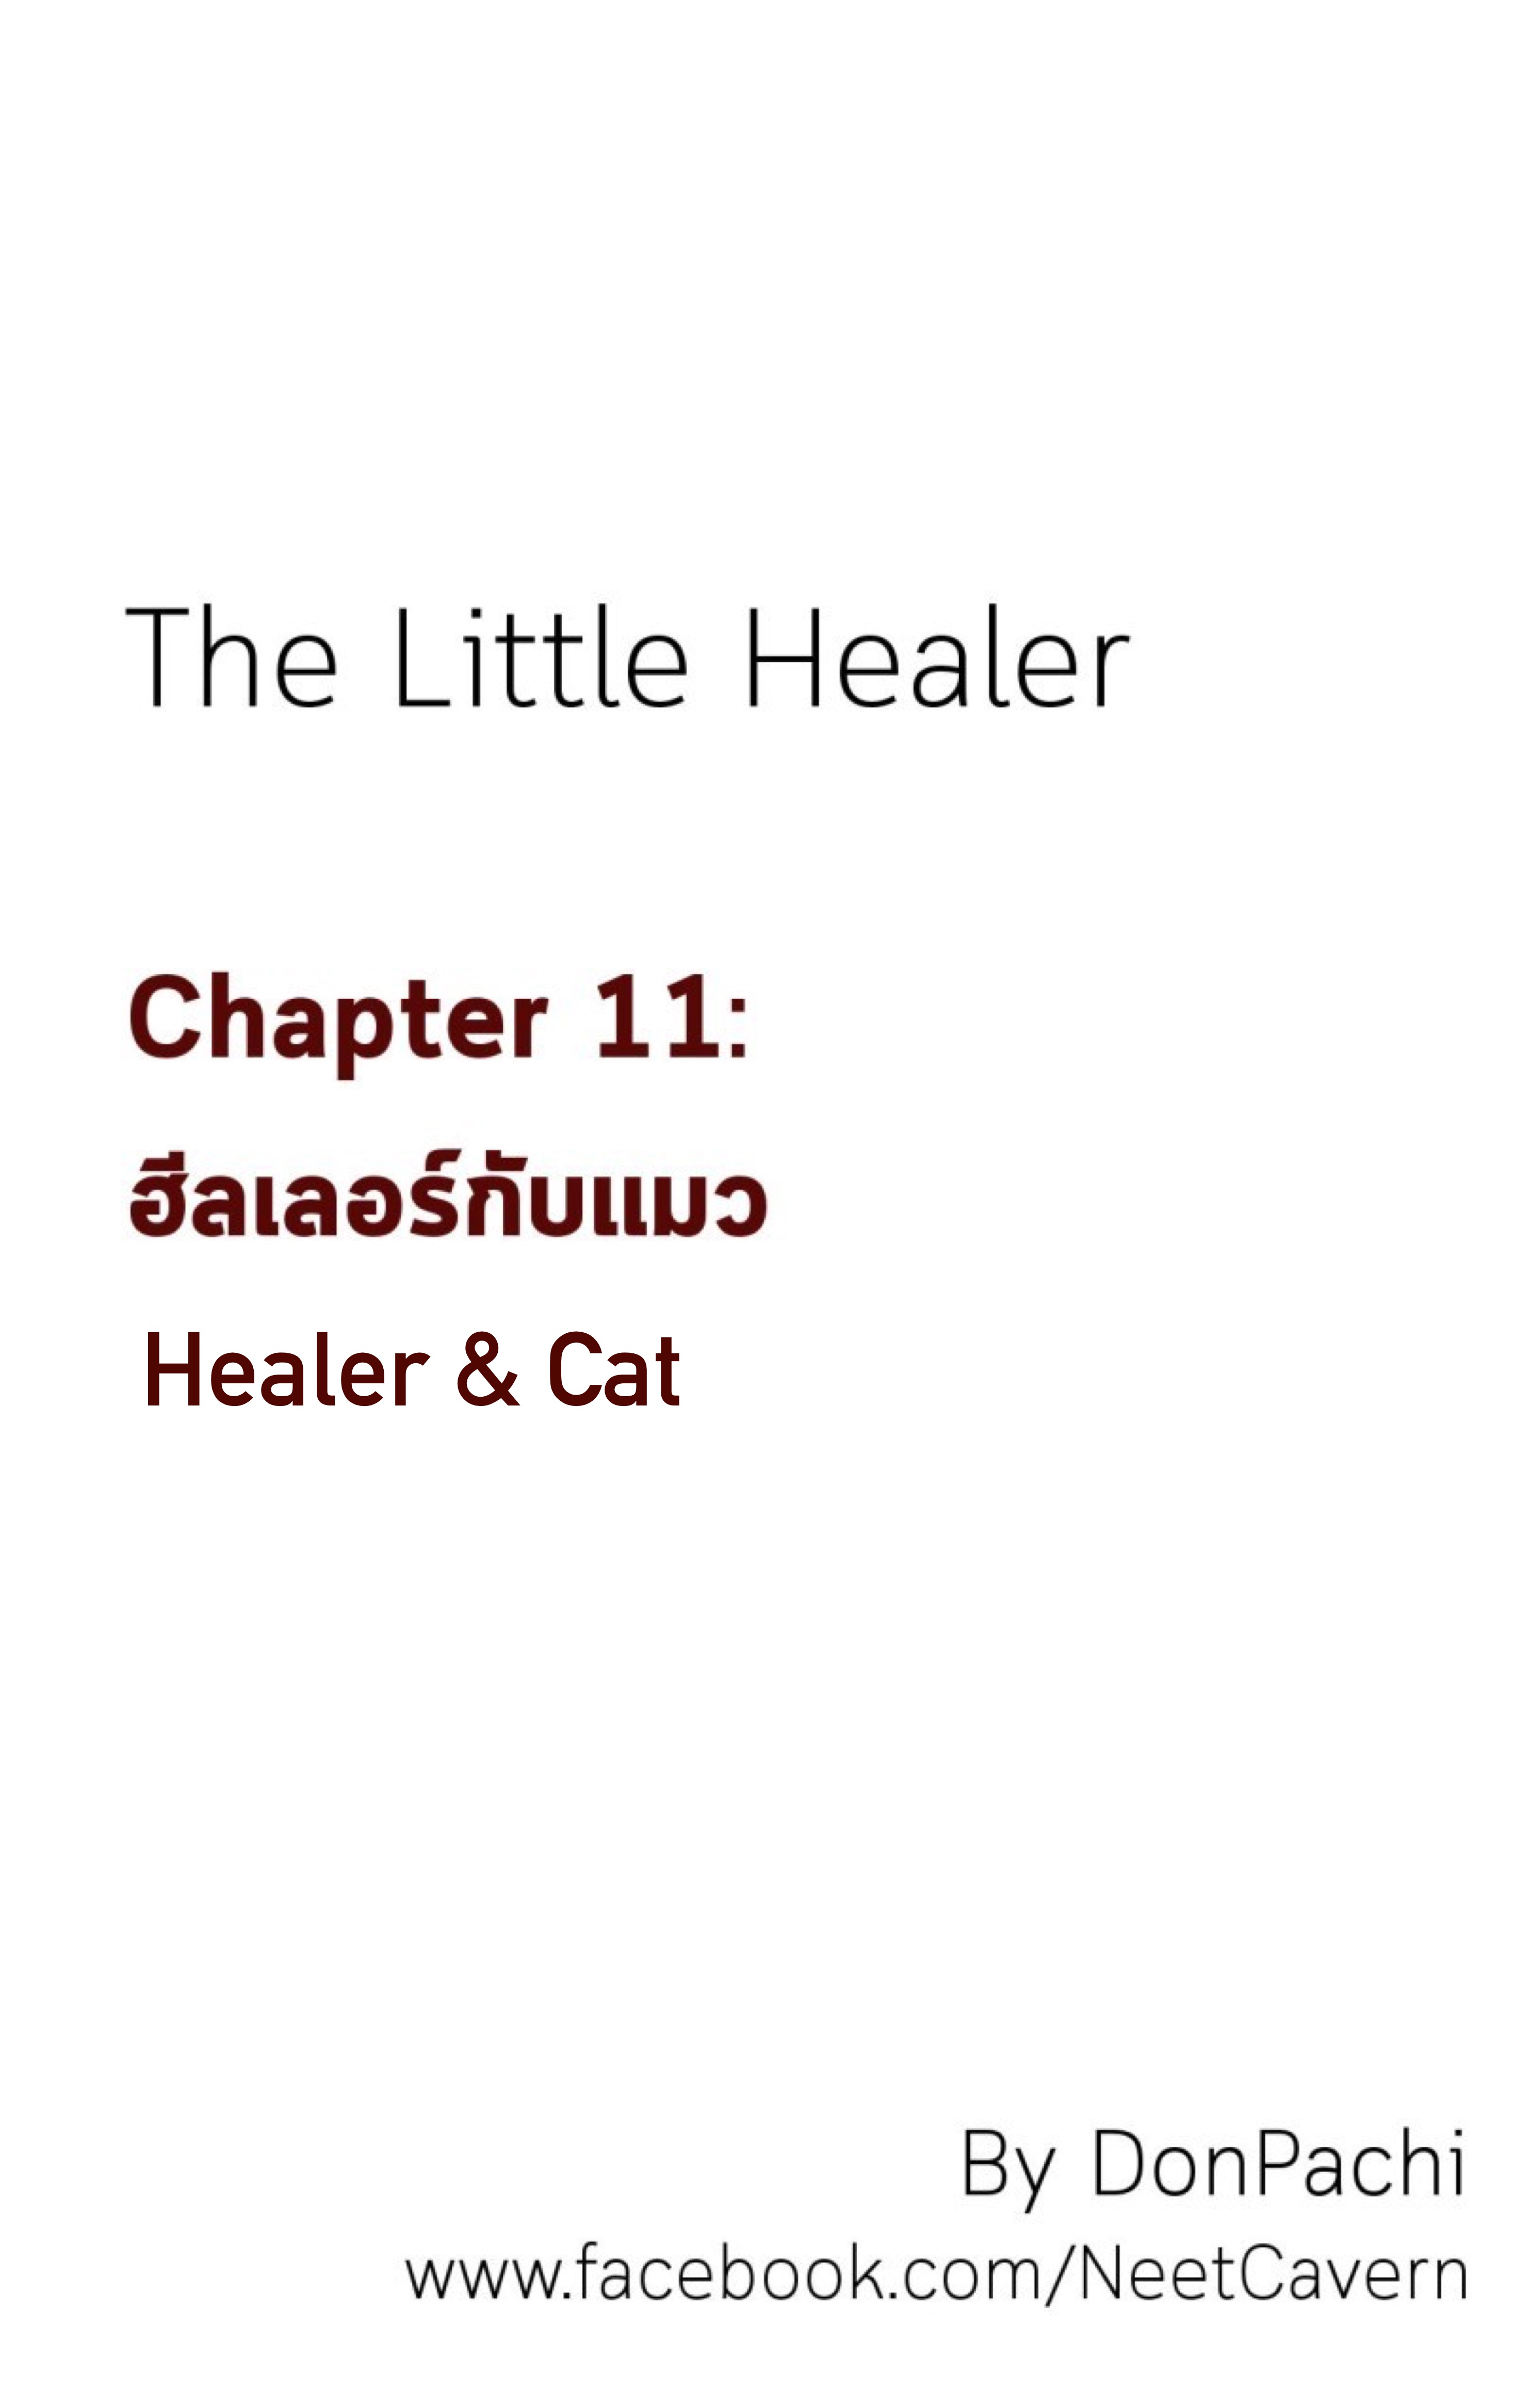 The Little Healer Chapter 11: Healer & Cat - Picture 2